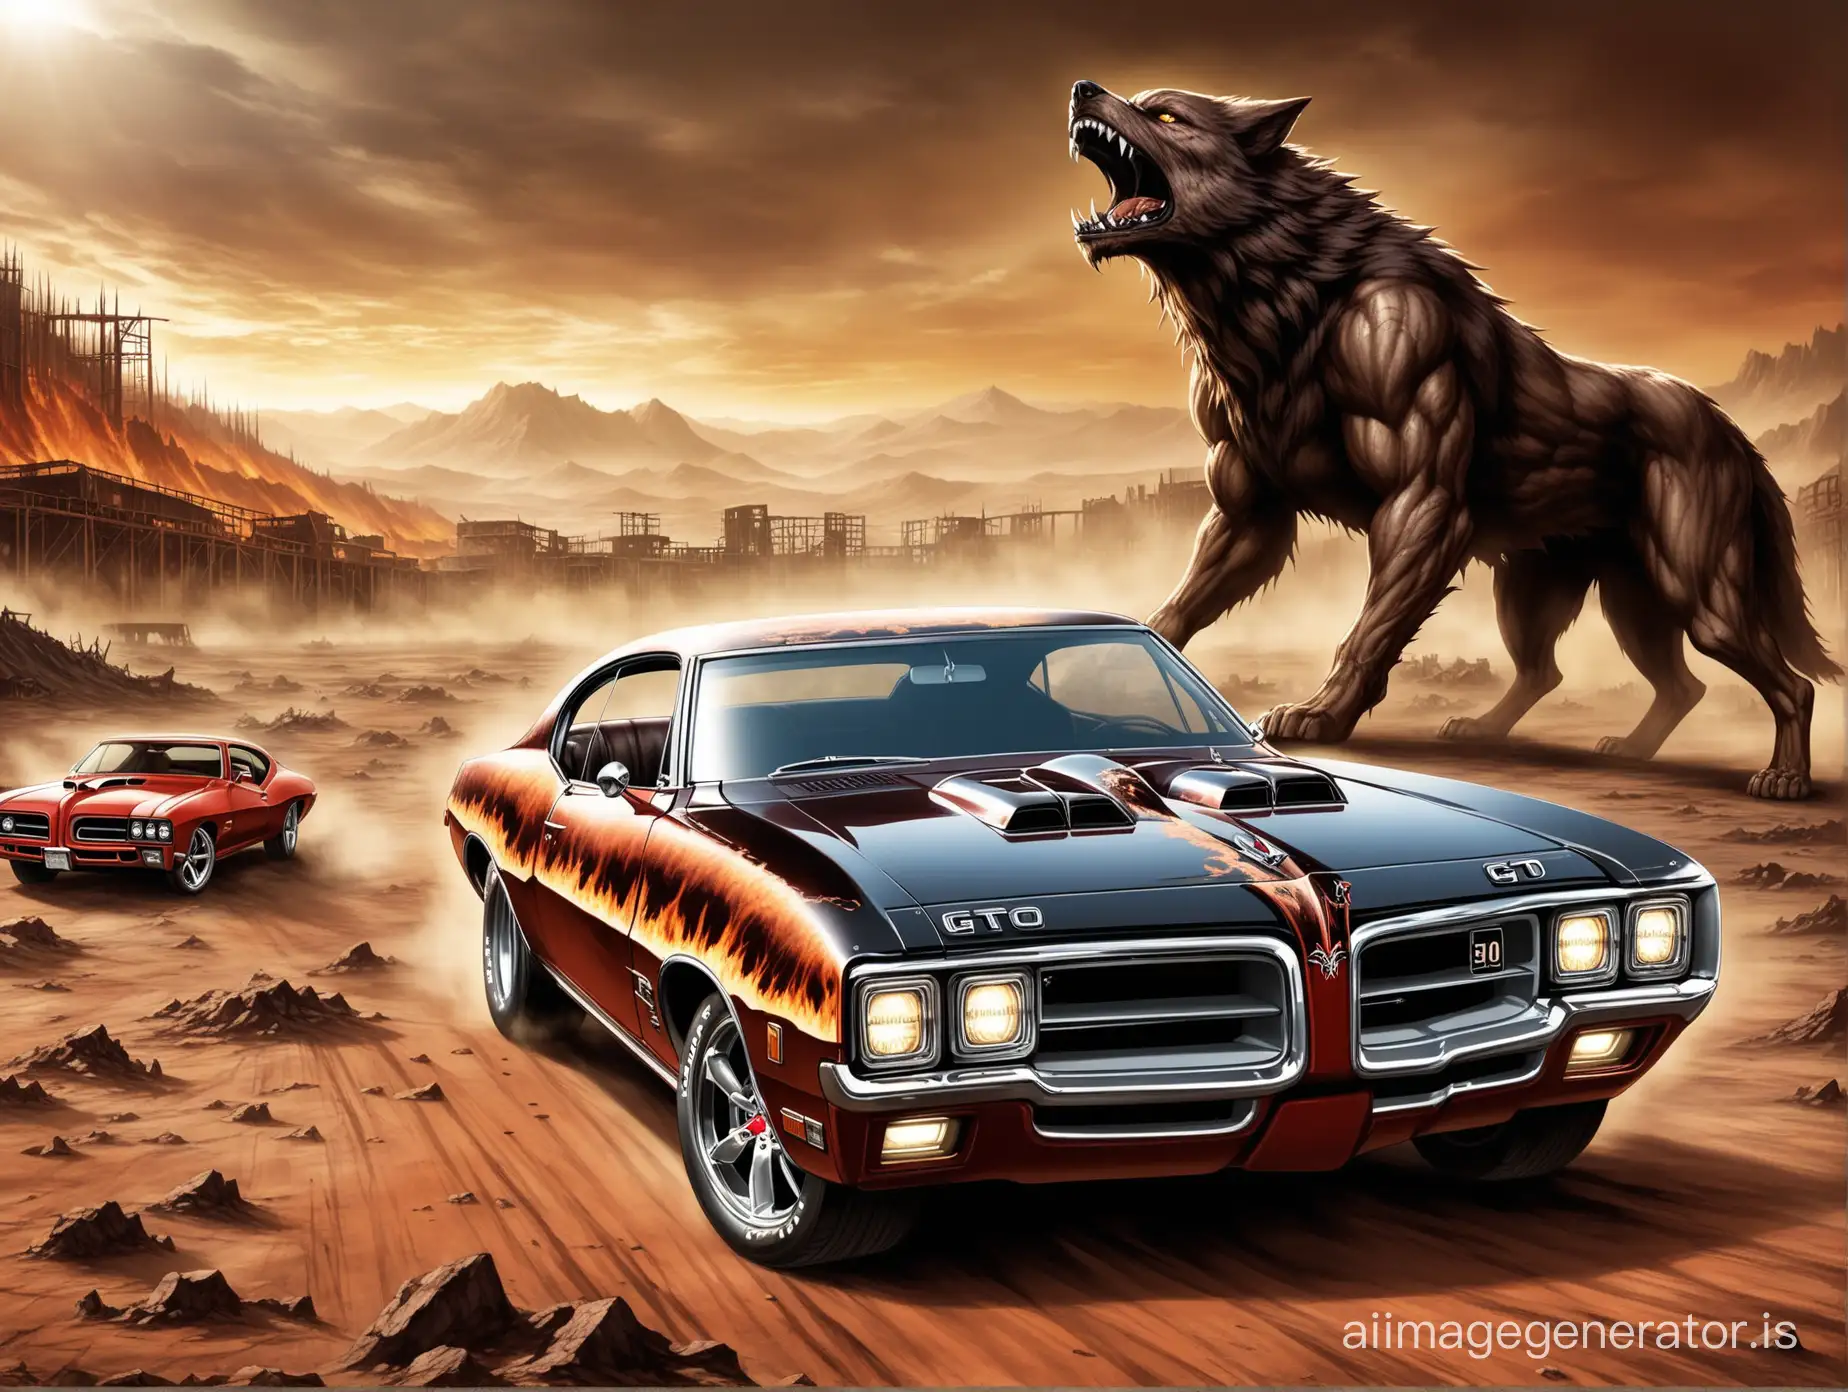 "Dante's Inferno",((style car ("Prior Design " - German tuning studio));(Pontiac GTO);Werewolf airbrushing;background "Fallout"|"Wasteland"